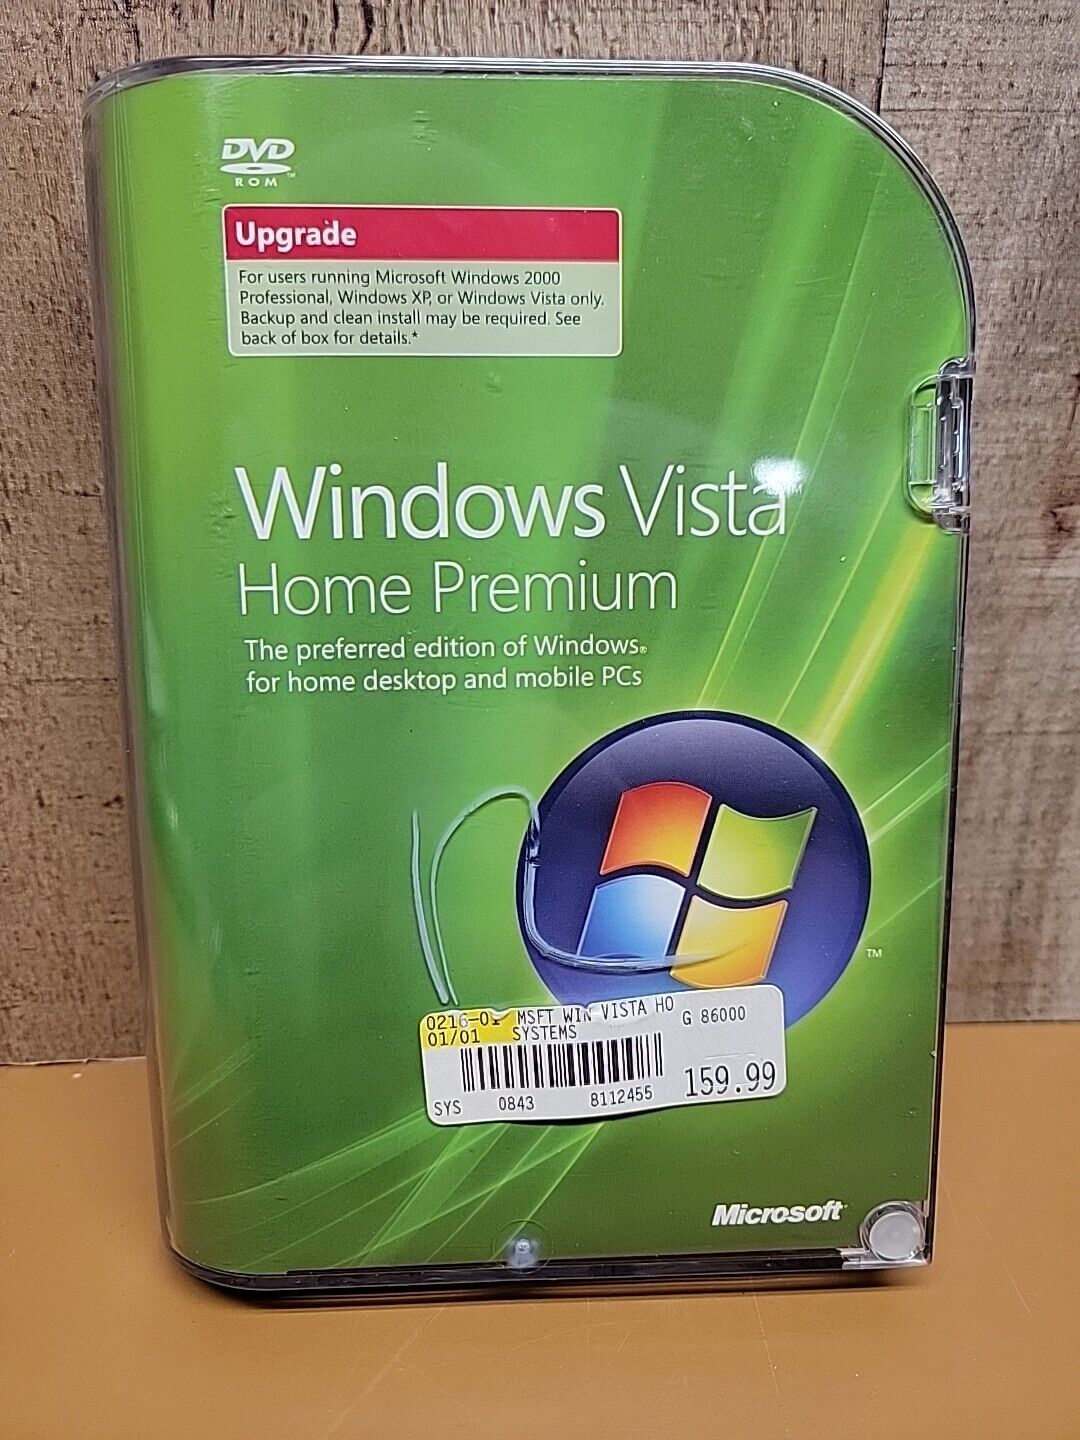 Microsoft WINDOWS VISTA HOME PREMIUM Upgrade 32 Bit DVD Software w/ Key